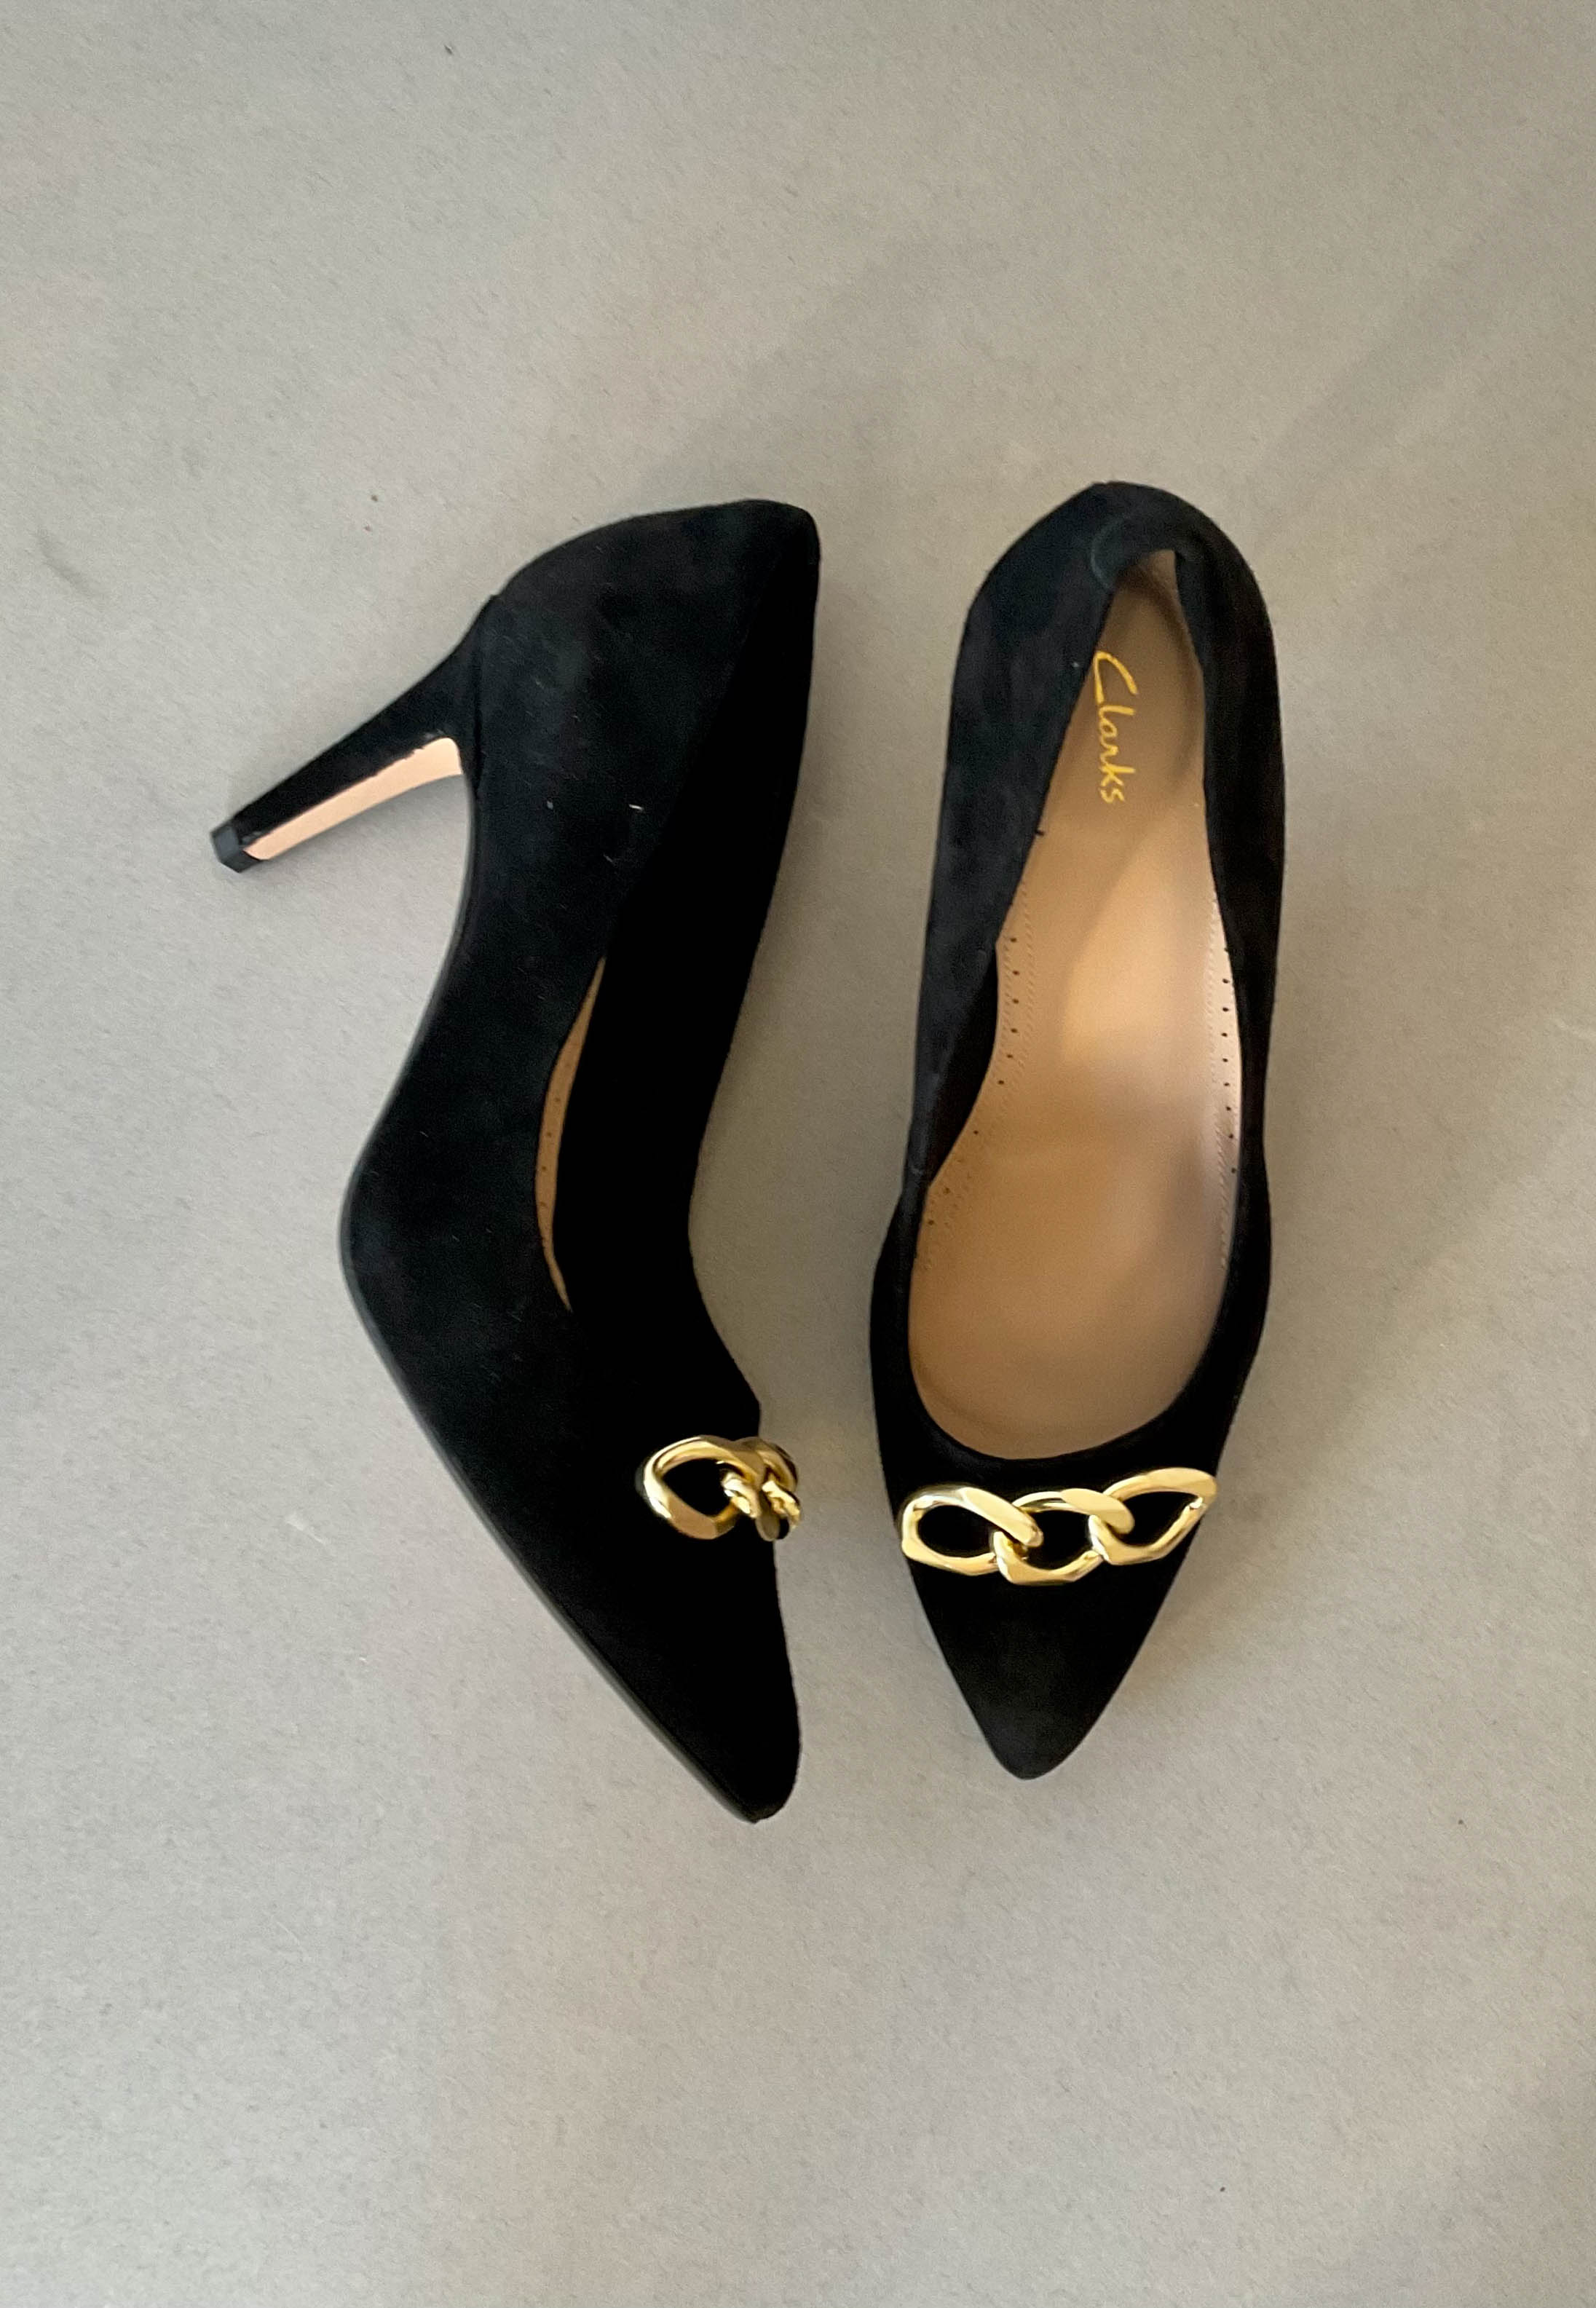 Clarks black high heel shoes